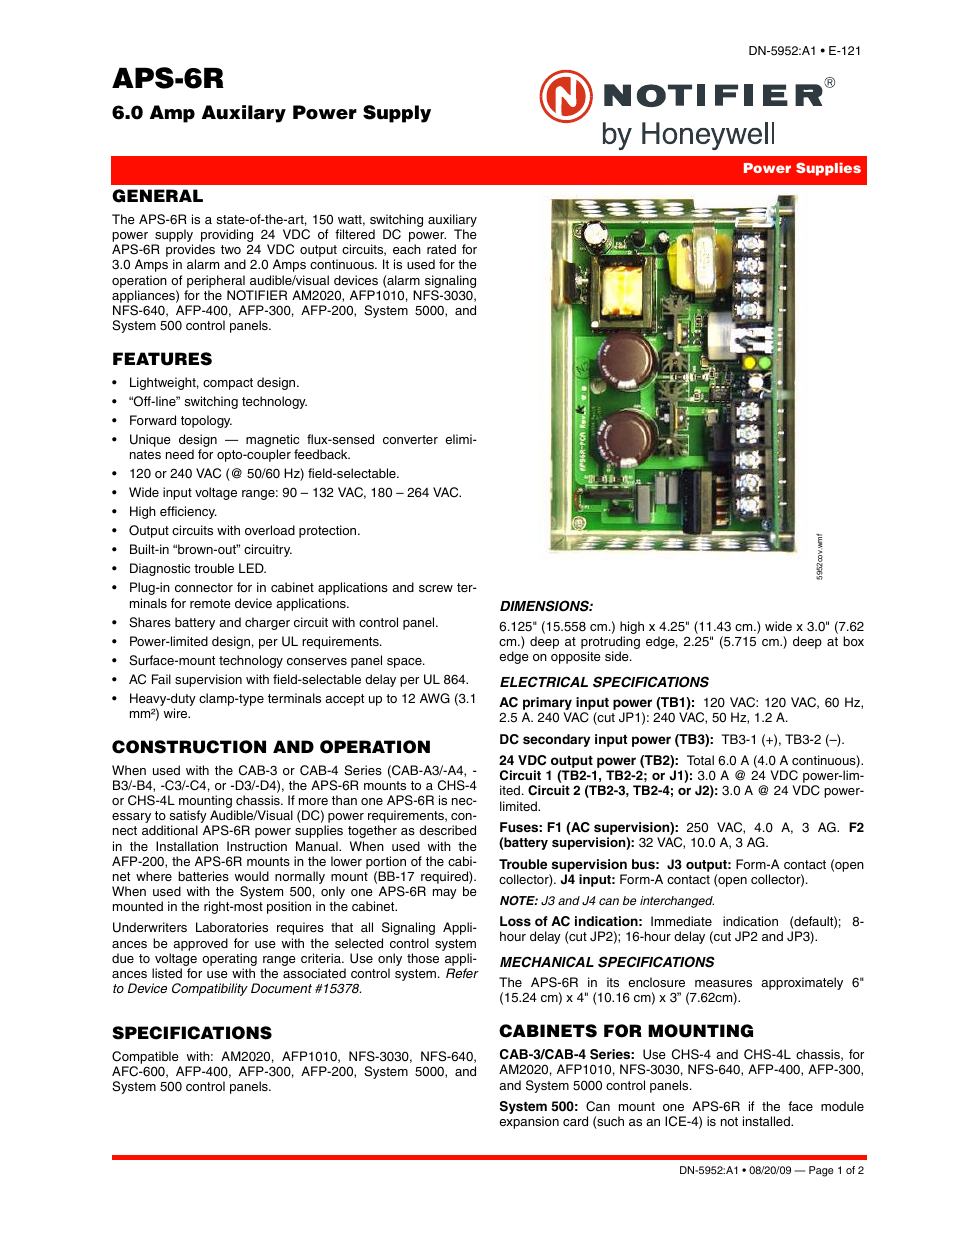 Notifier APS-6R User Manual | 2 pages